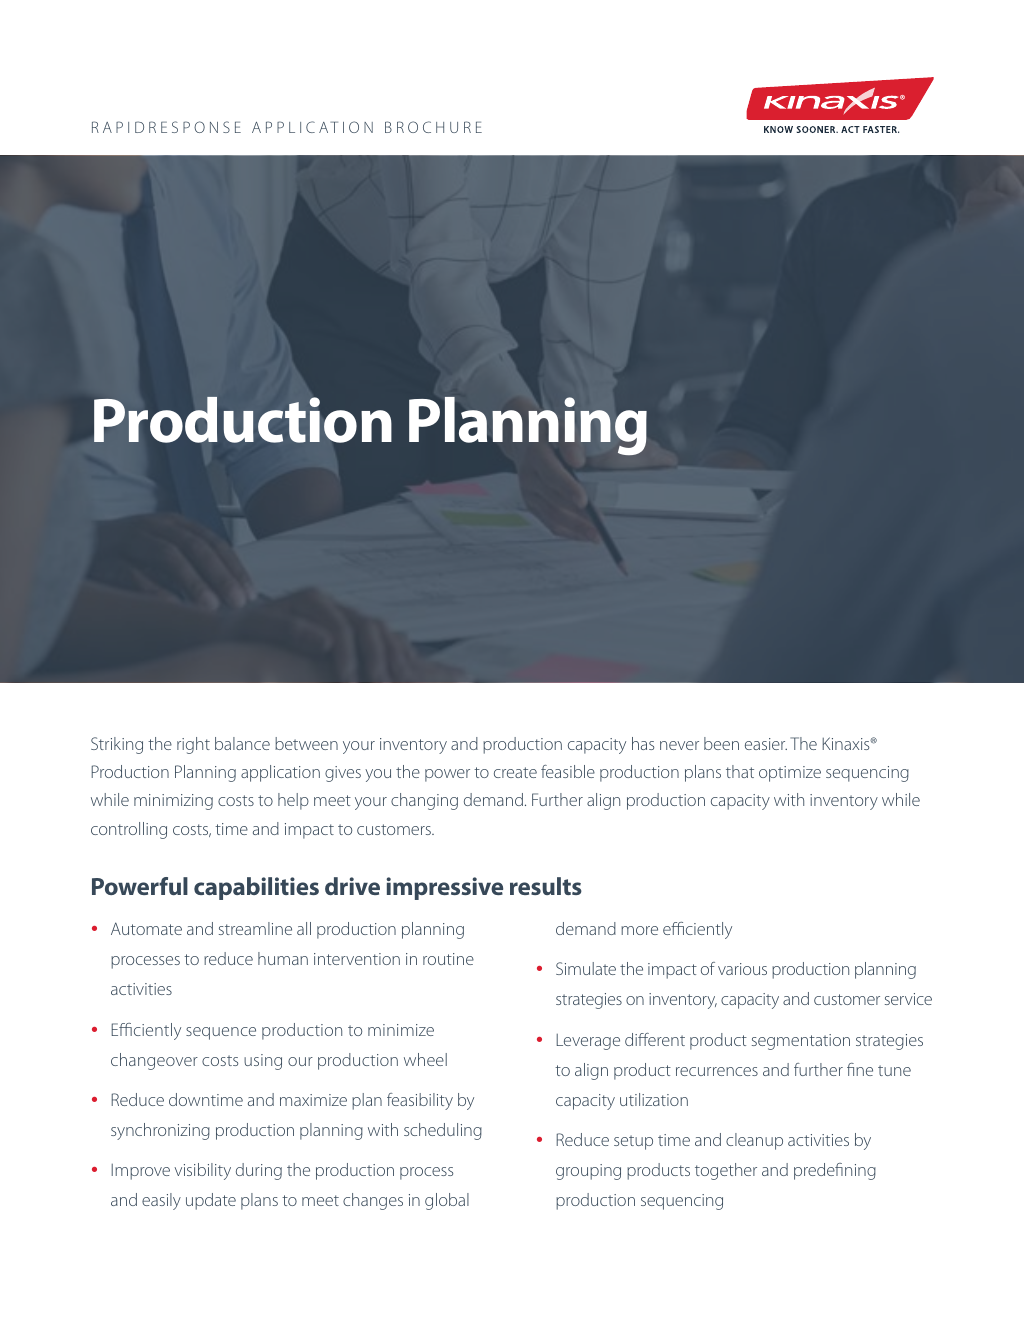 Production Planning Brochure